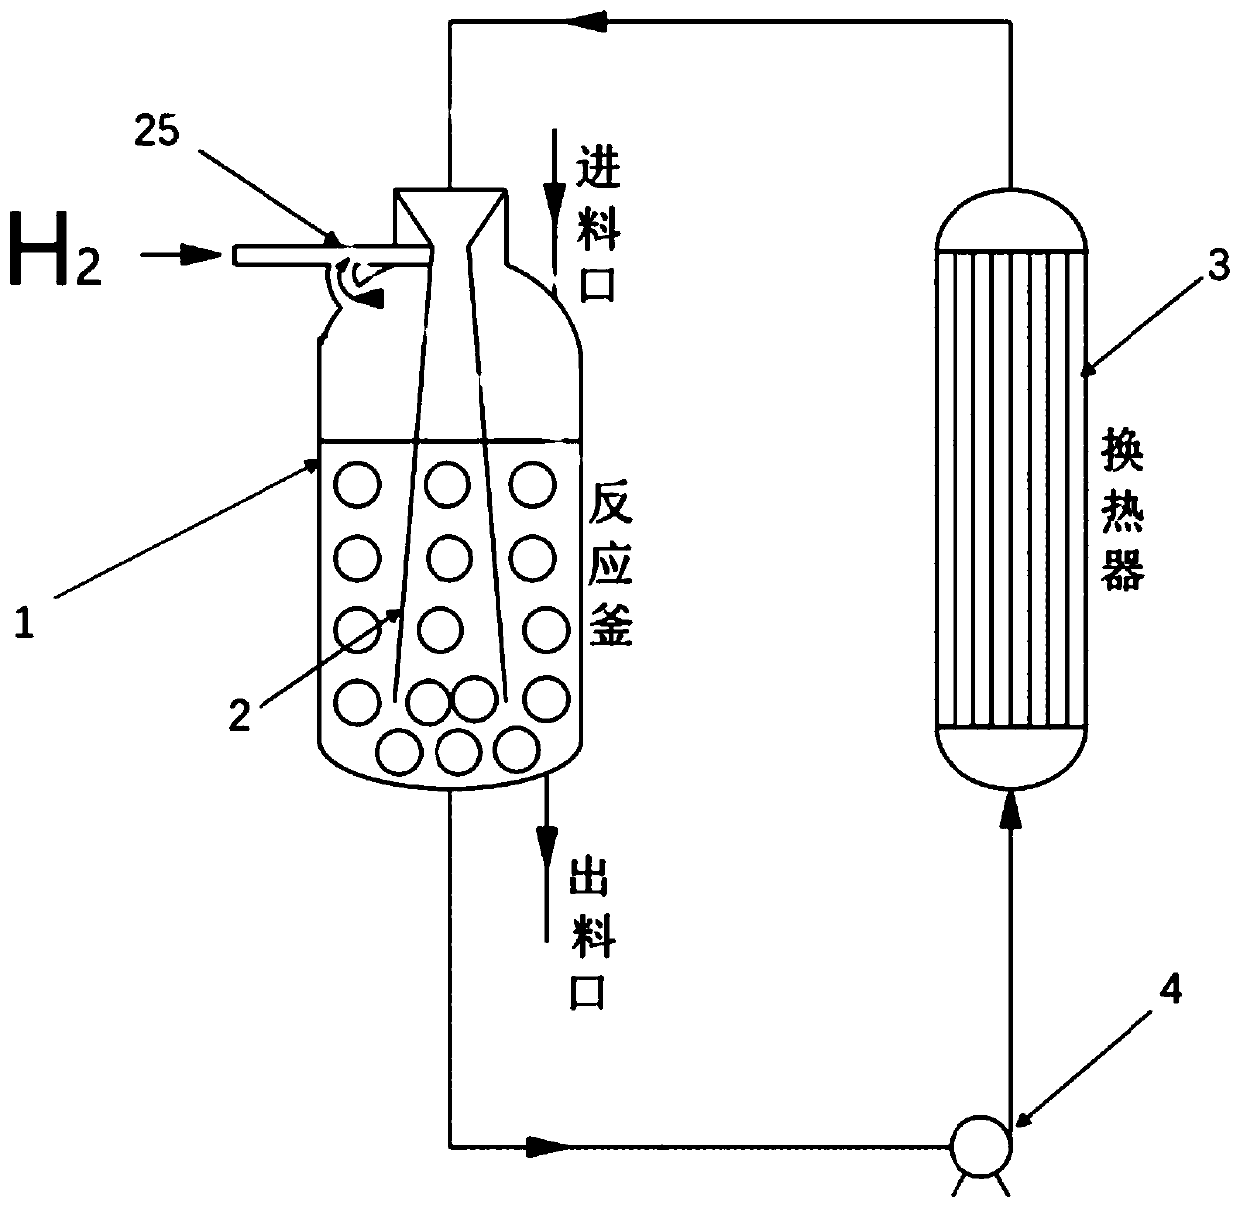 Loop reactor for preparing 1, 3-propylene glycol and preparation method of 1, 3-propylene glycol